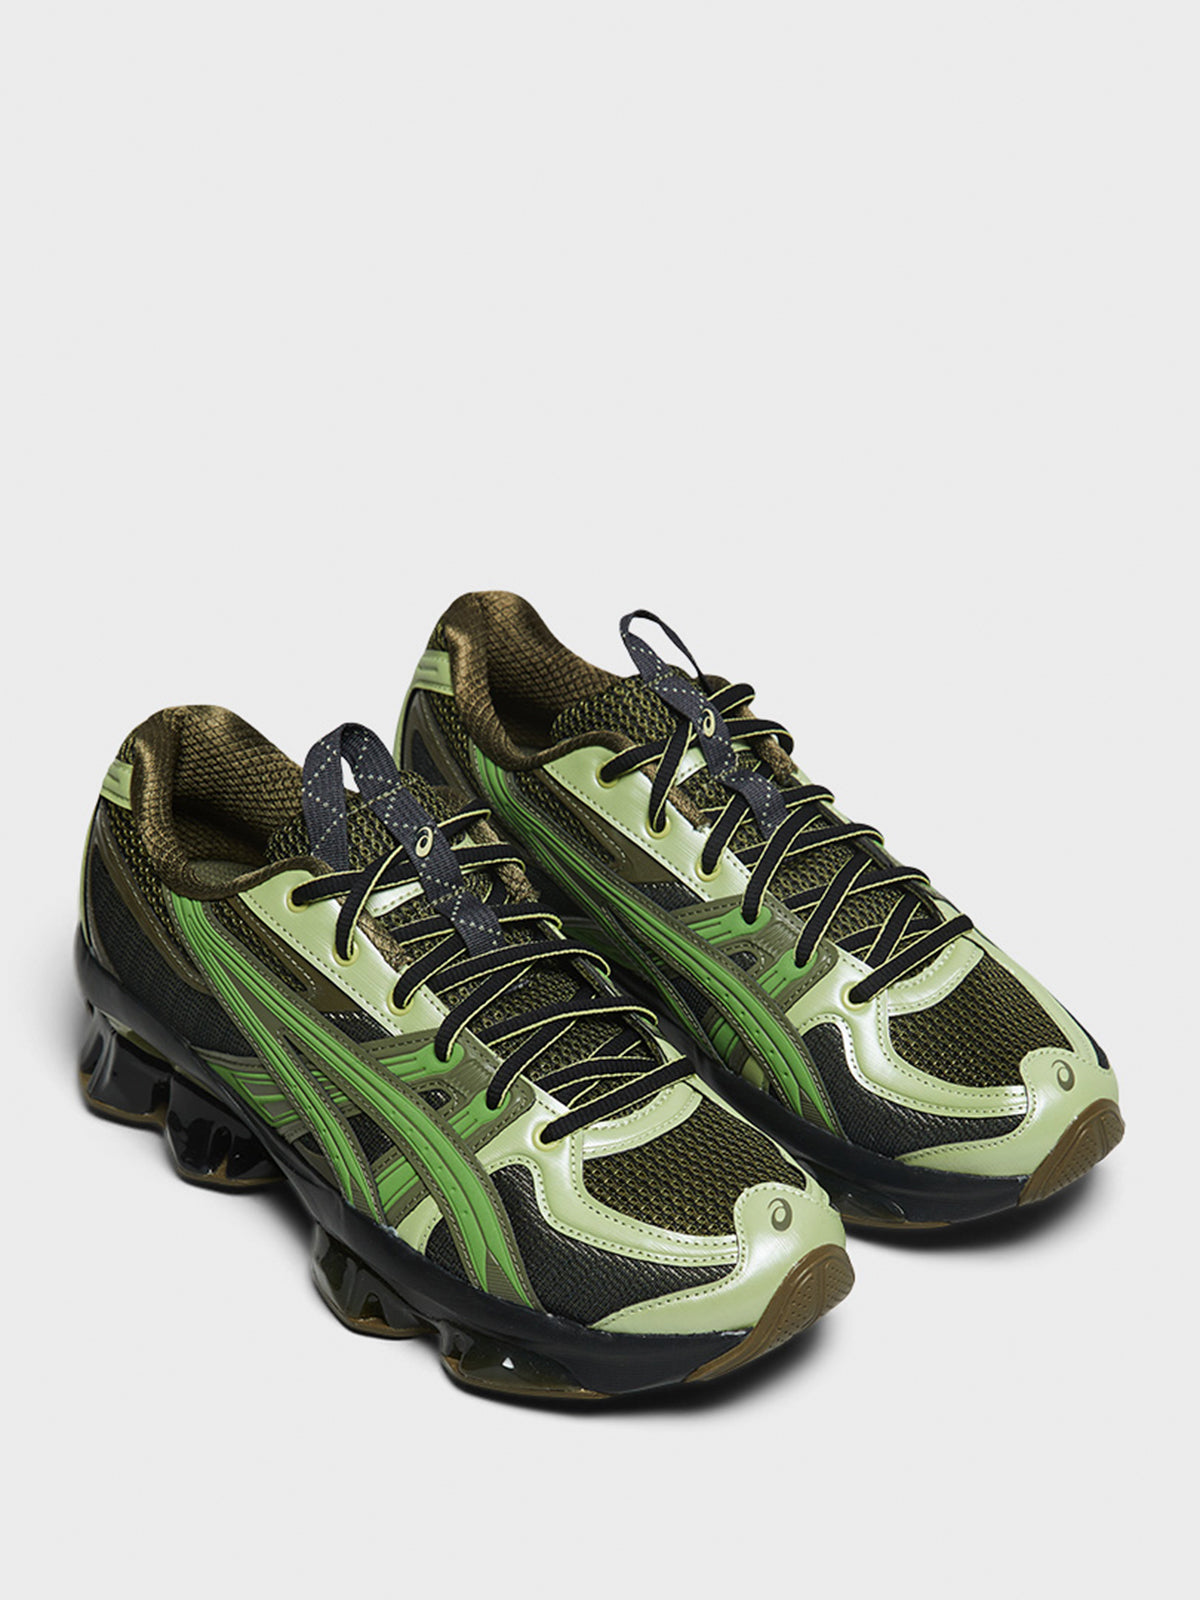 US5-S Gel-Quantum Kinetic Sneakers in Green and Black